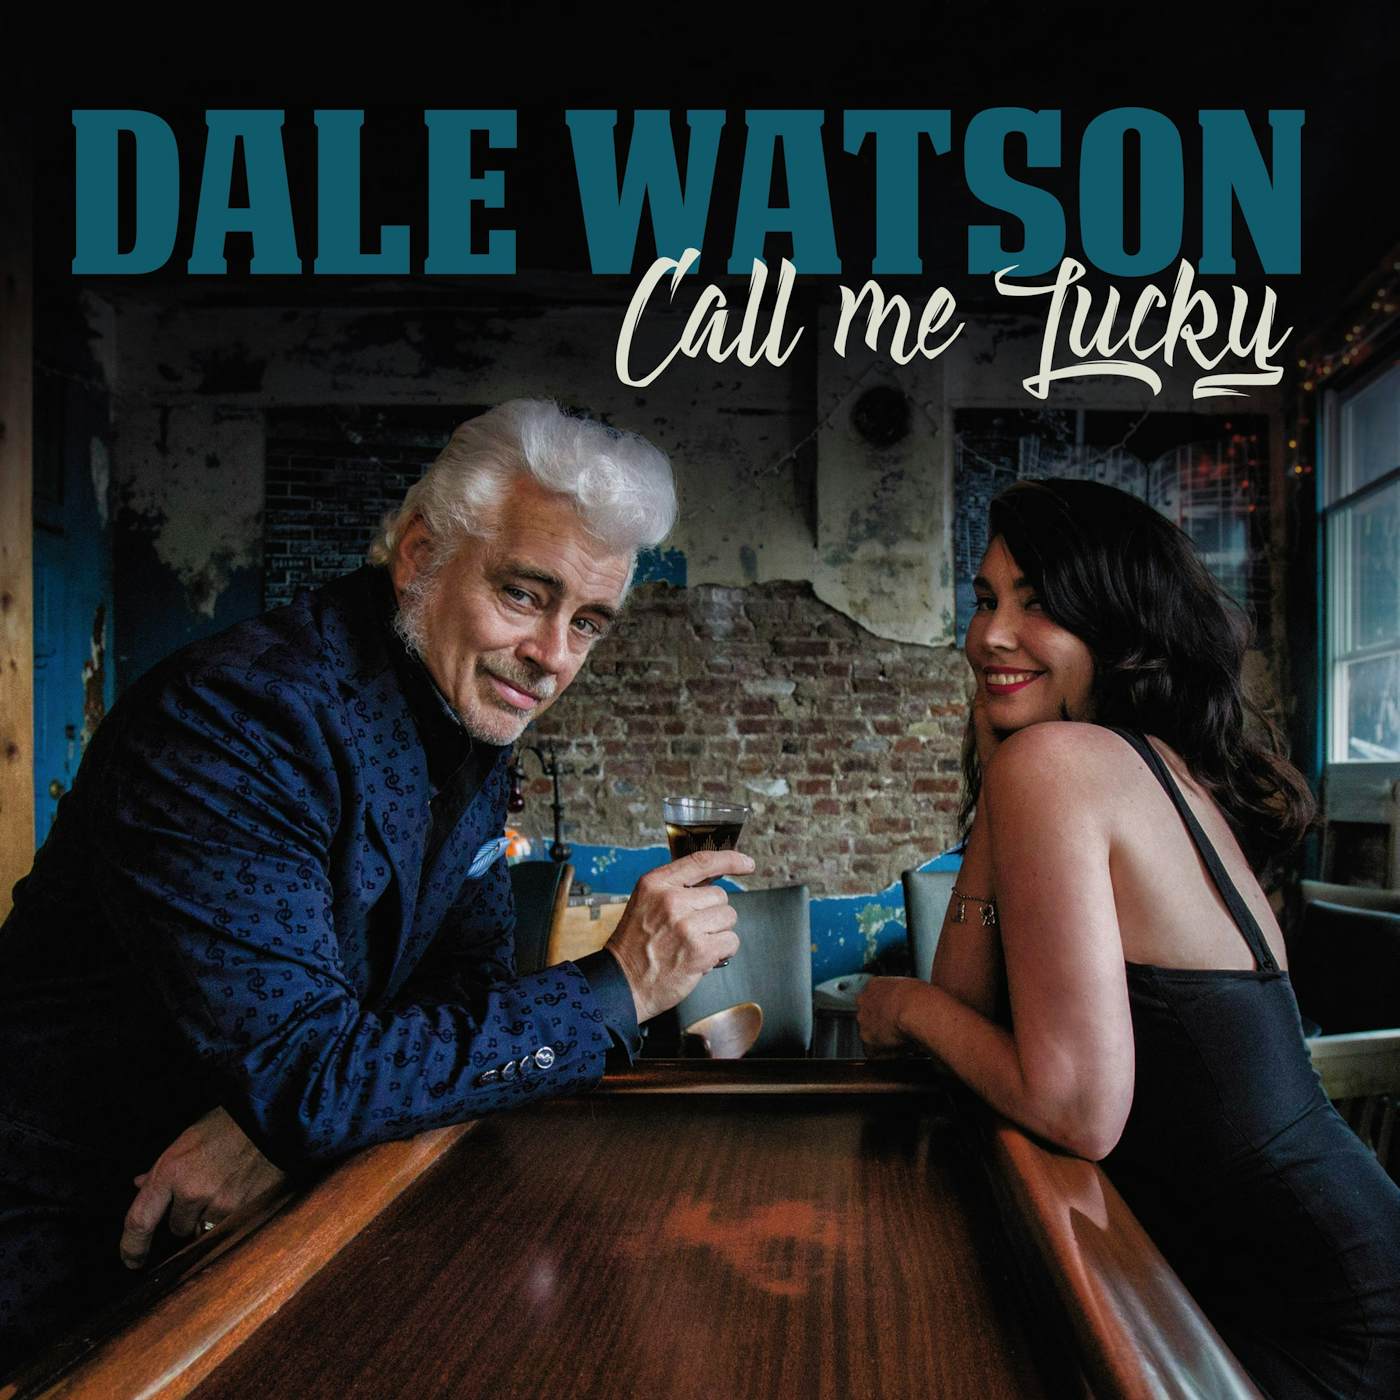 Dale Watson Call Me Lucky CD